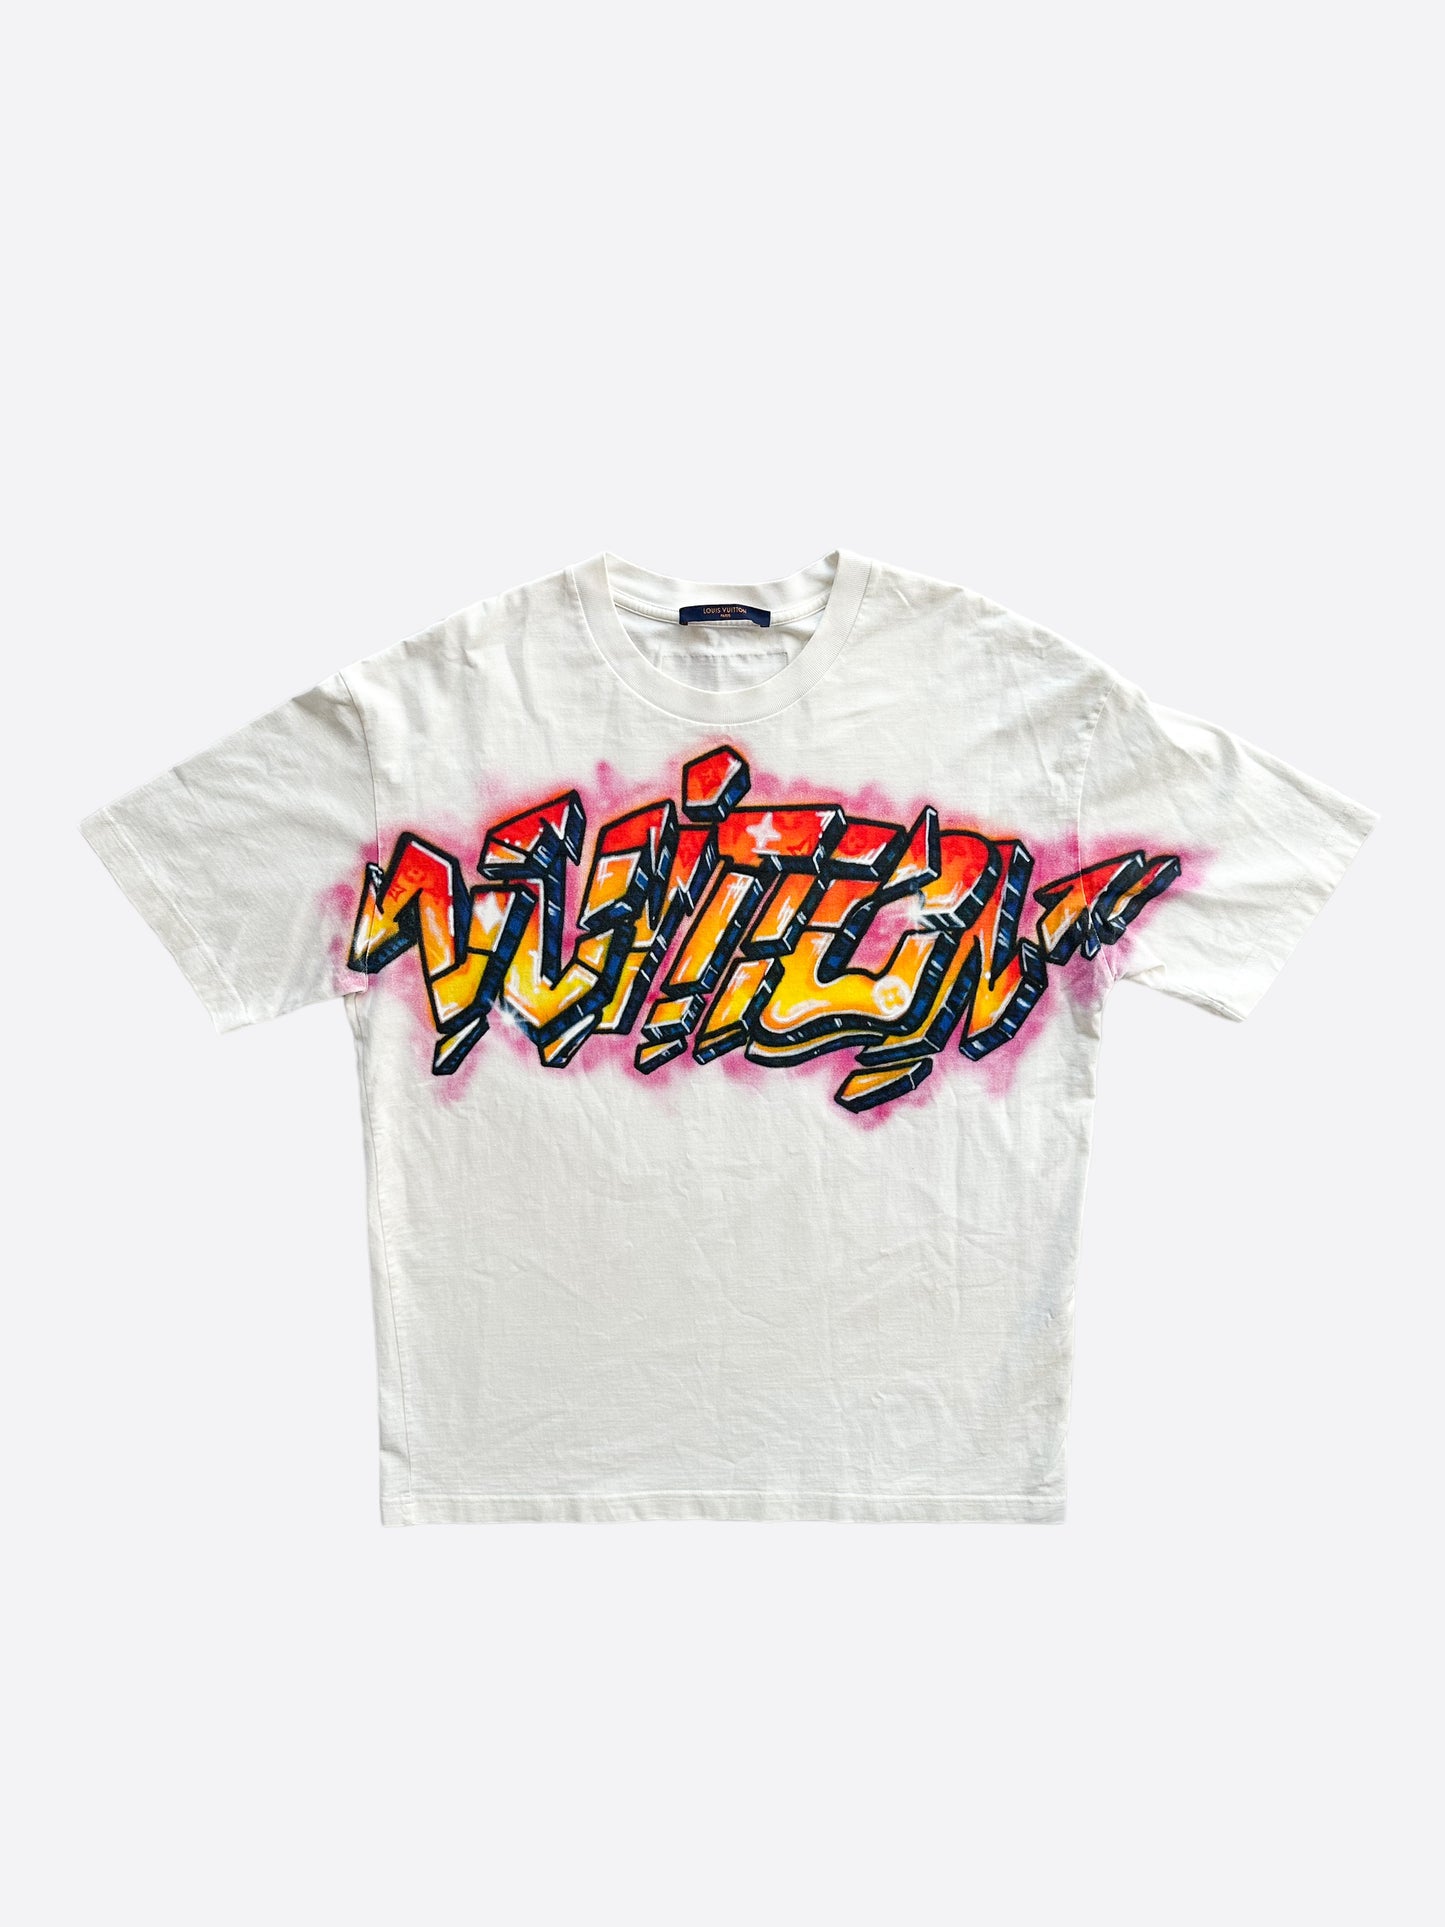 Louis Vuitton White 'Vuitton Graffiti' T-Shirt